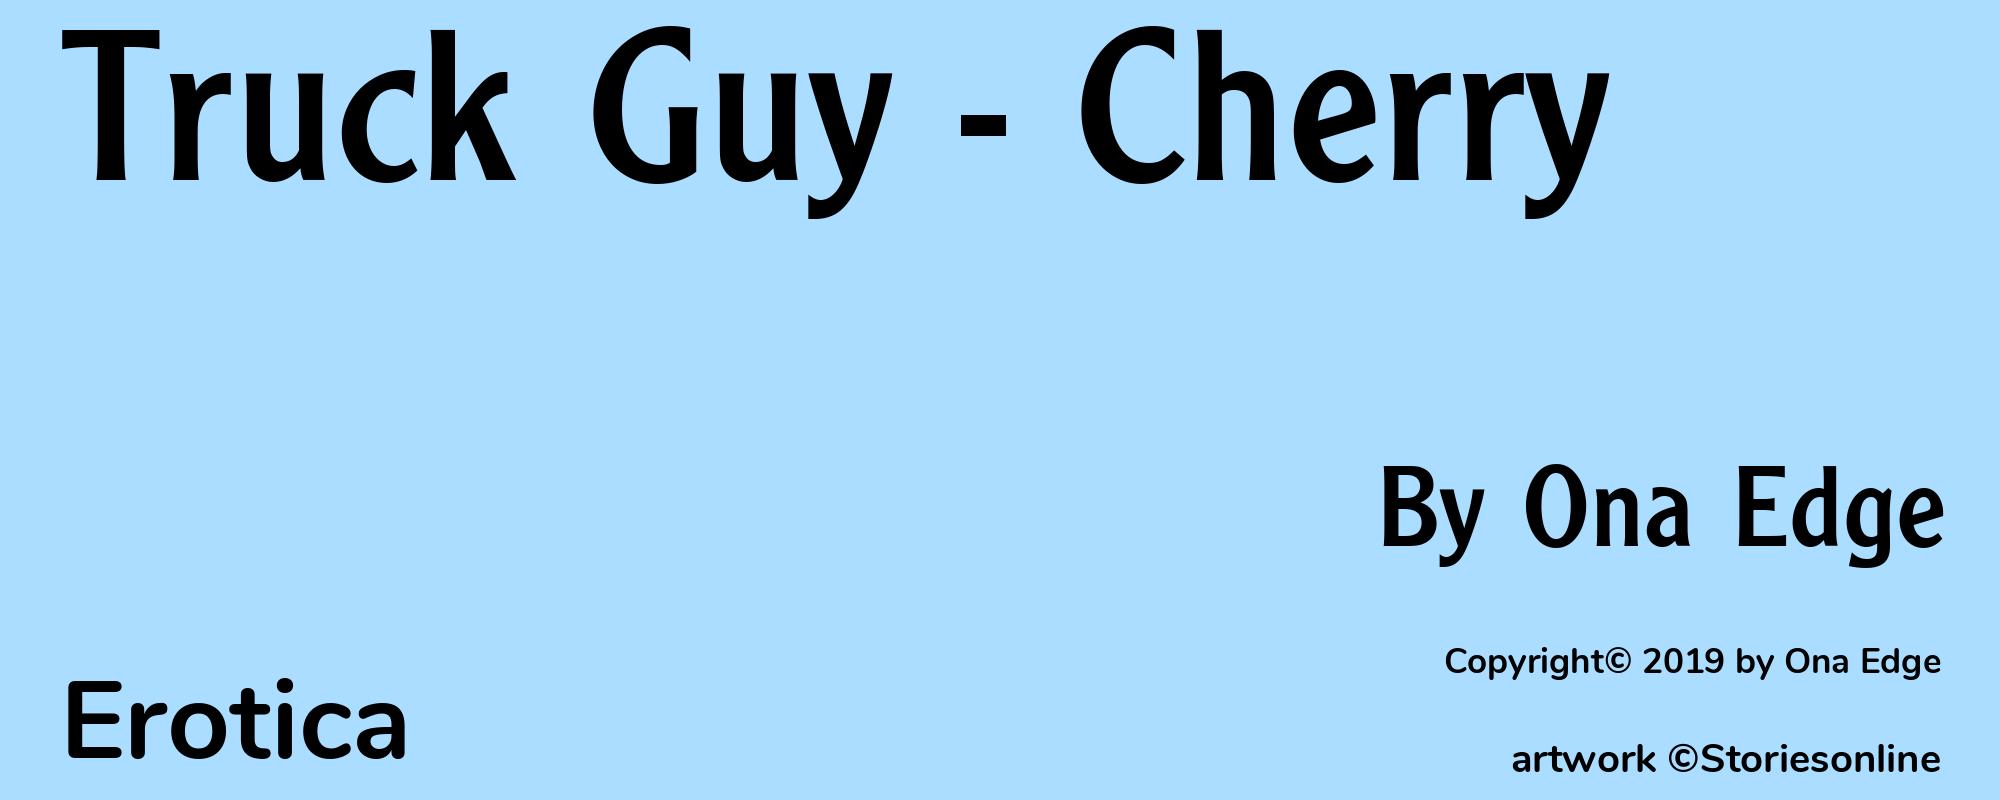 Truck Guy - Cherry - Cover